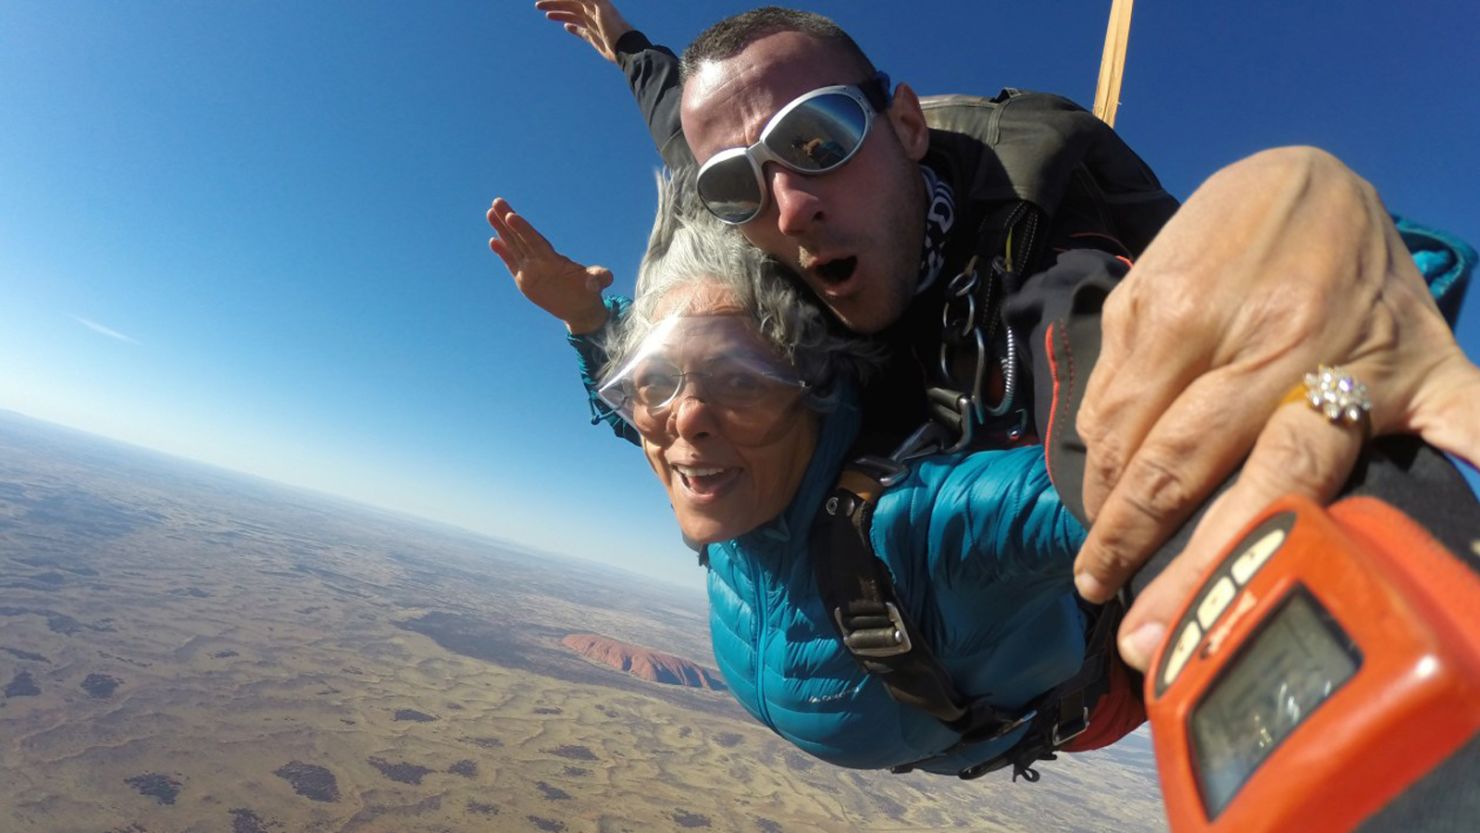 At the age of 66, Sudha Mahalingam went skydiving in Uluru, Australia.